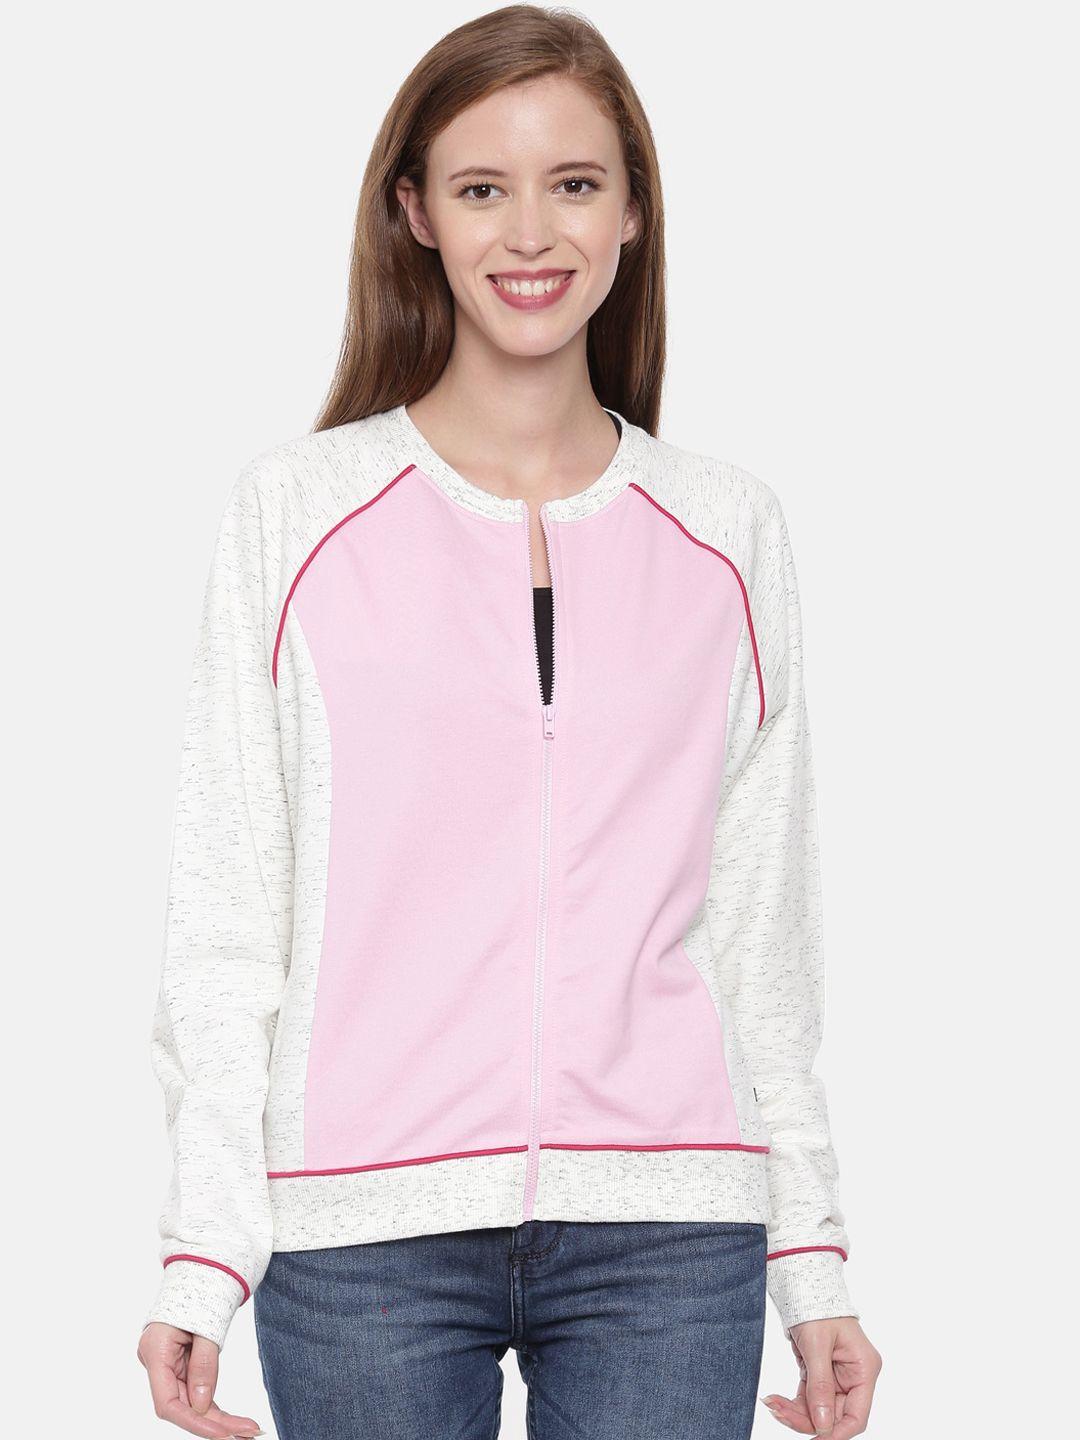 3pin-women-pink-&-grey-colorblocked-sweatshirt